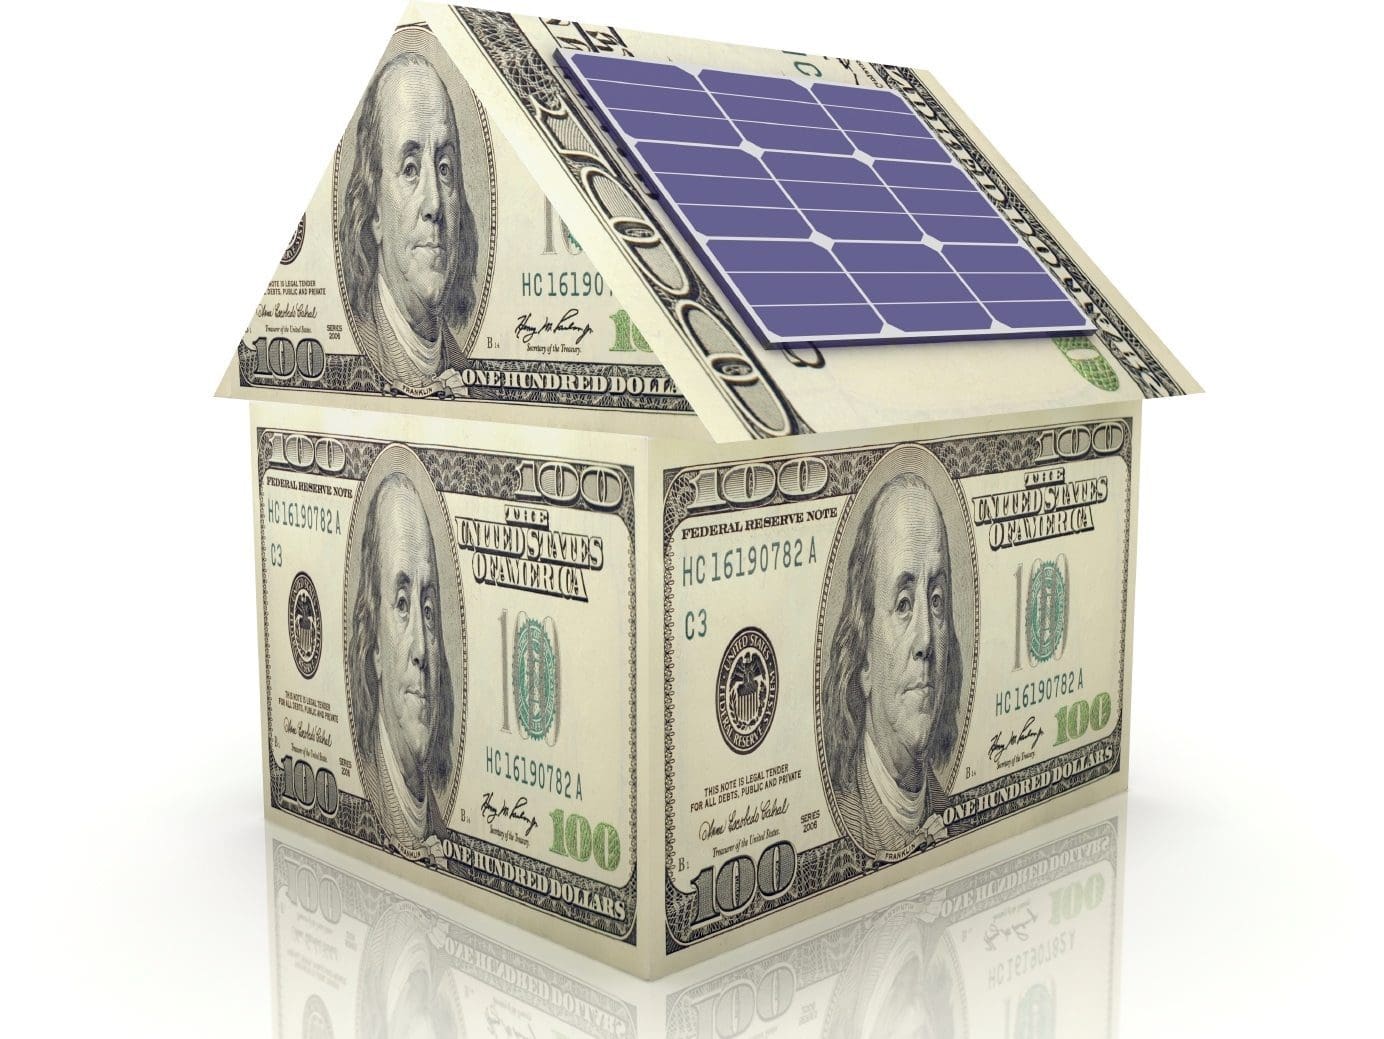 How to Buy Solar